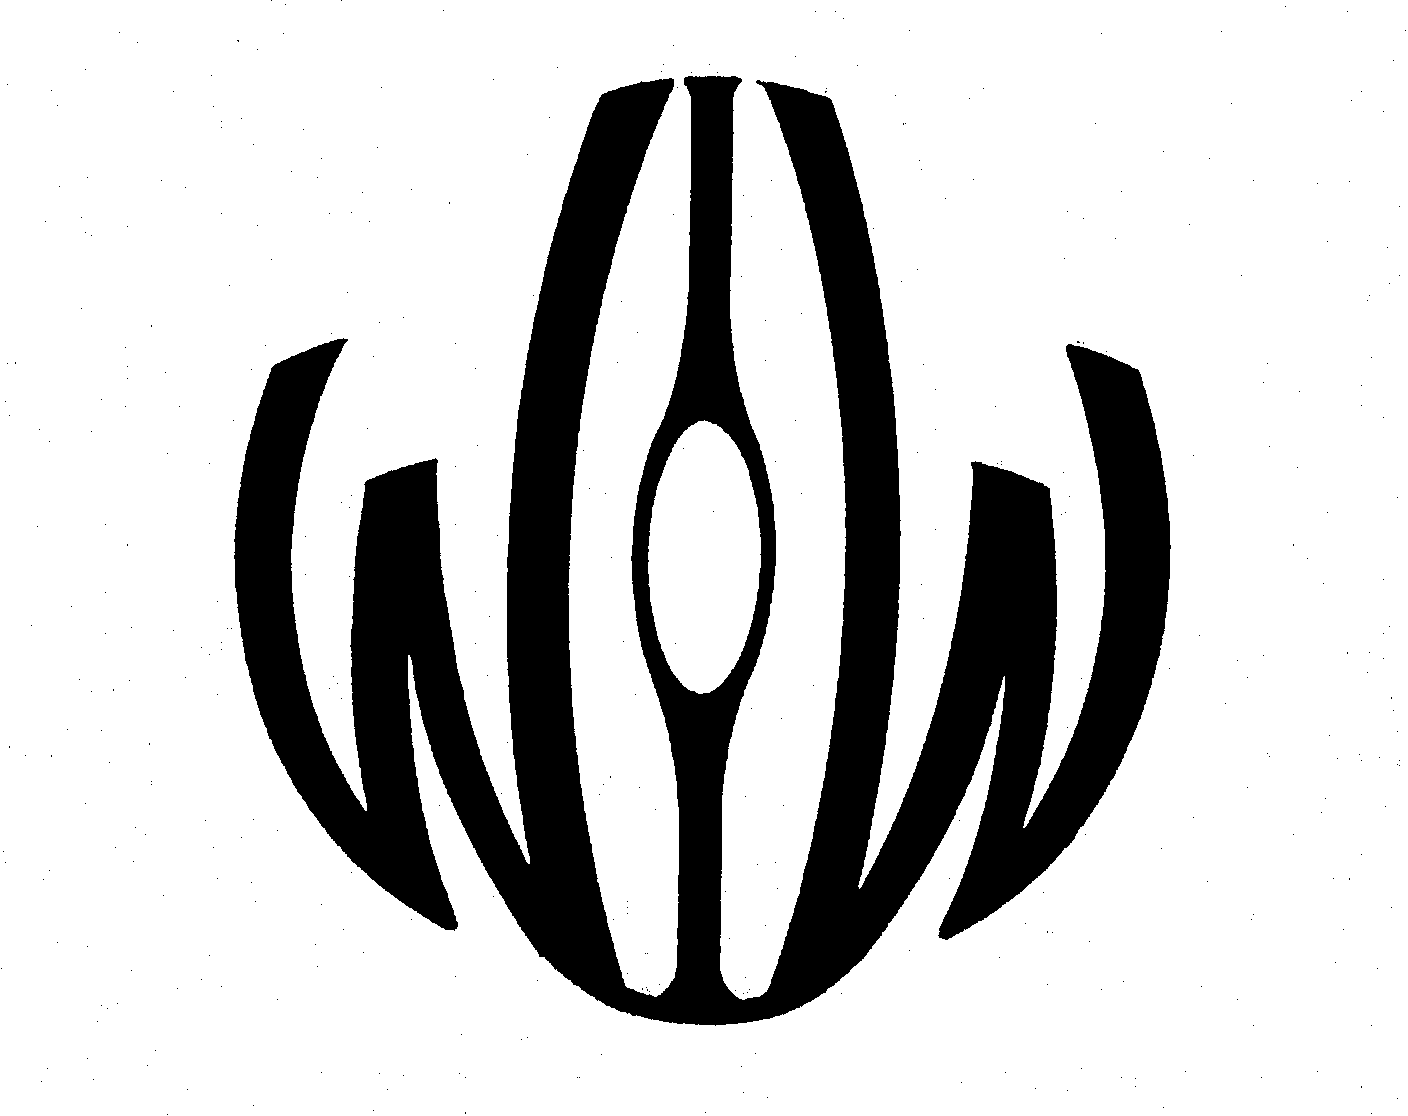 Trademark Logo WIW